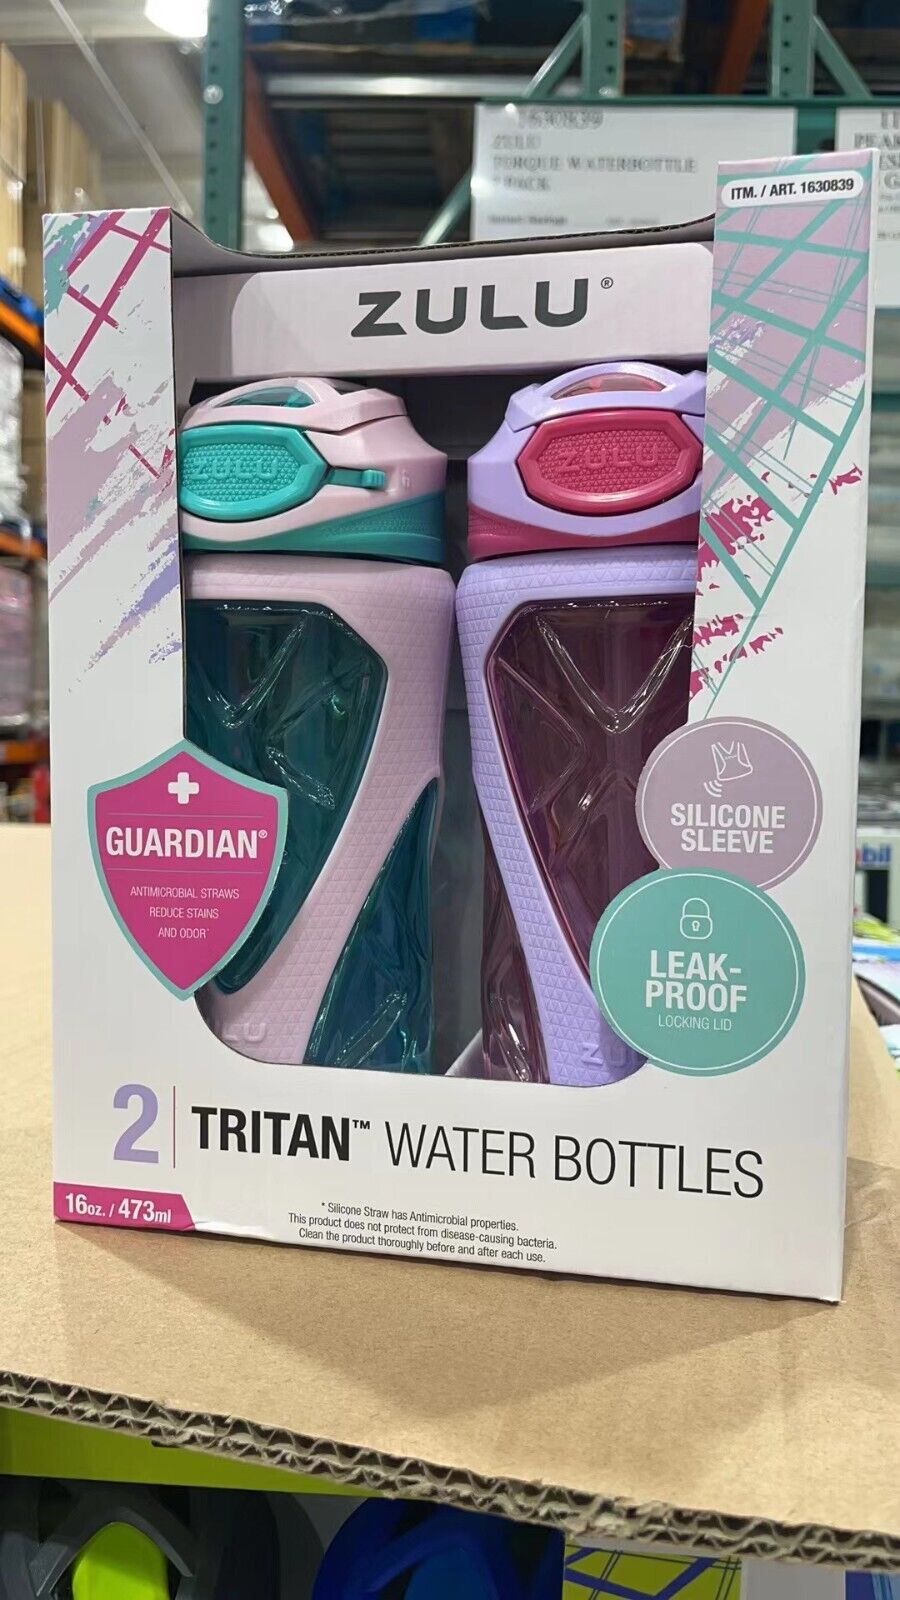 Zulu Tritan Water Bottle for Children with Silicon sleeve & leak-proof-16oz*2pcs